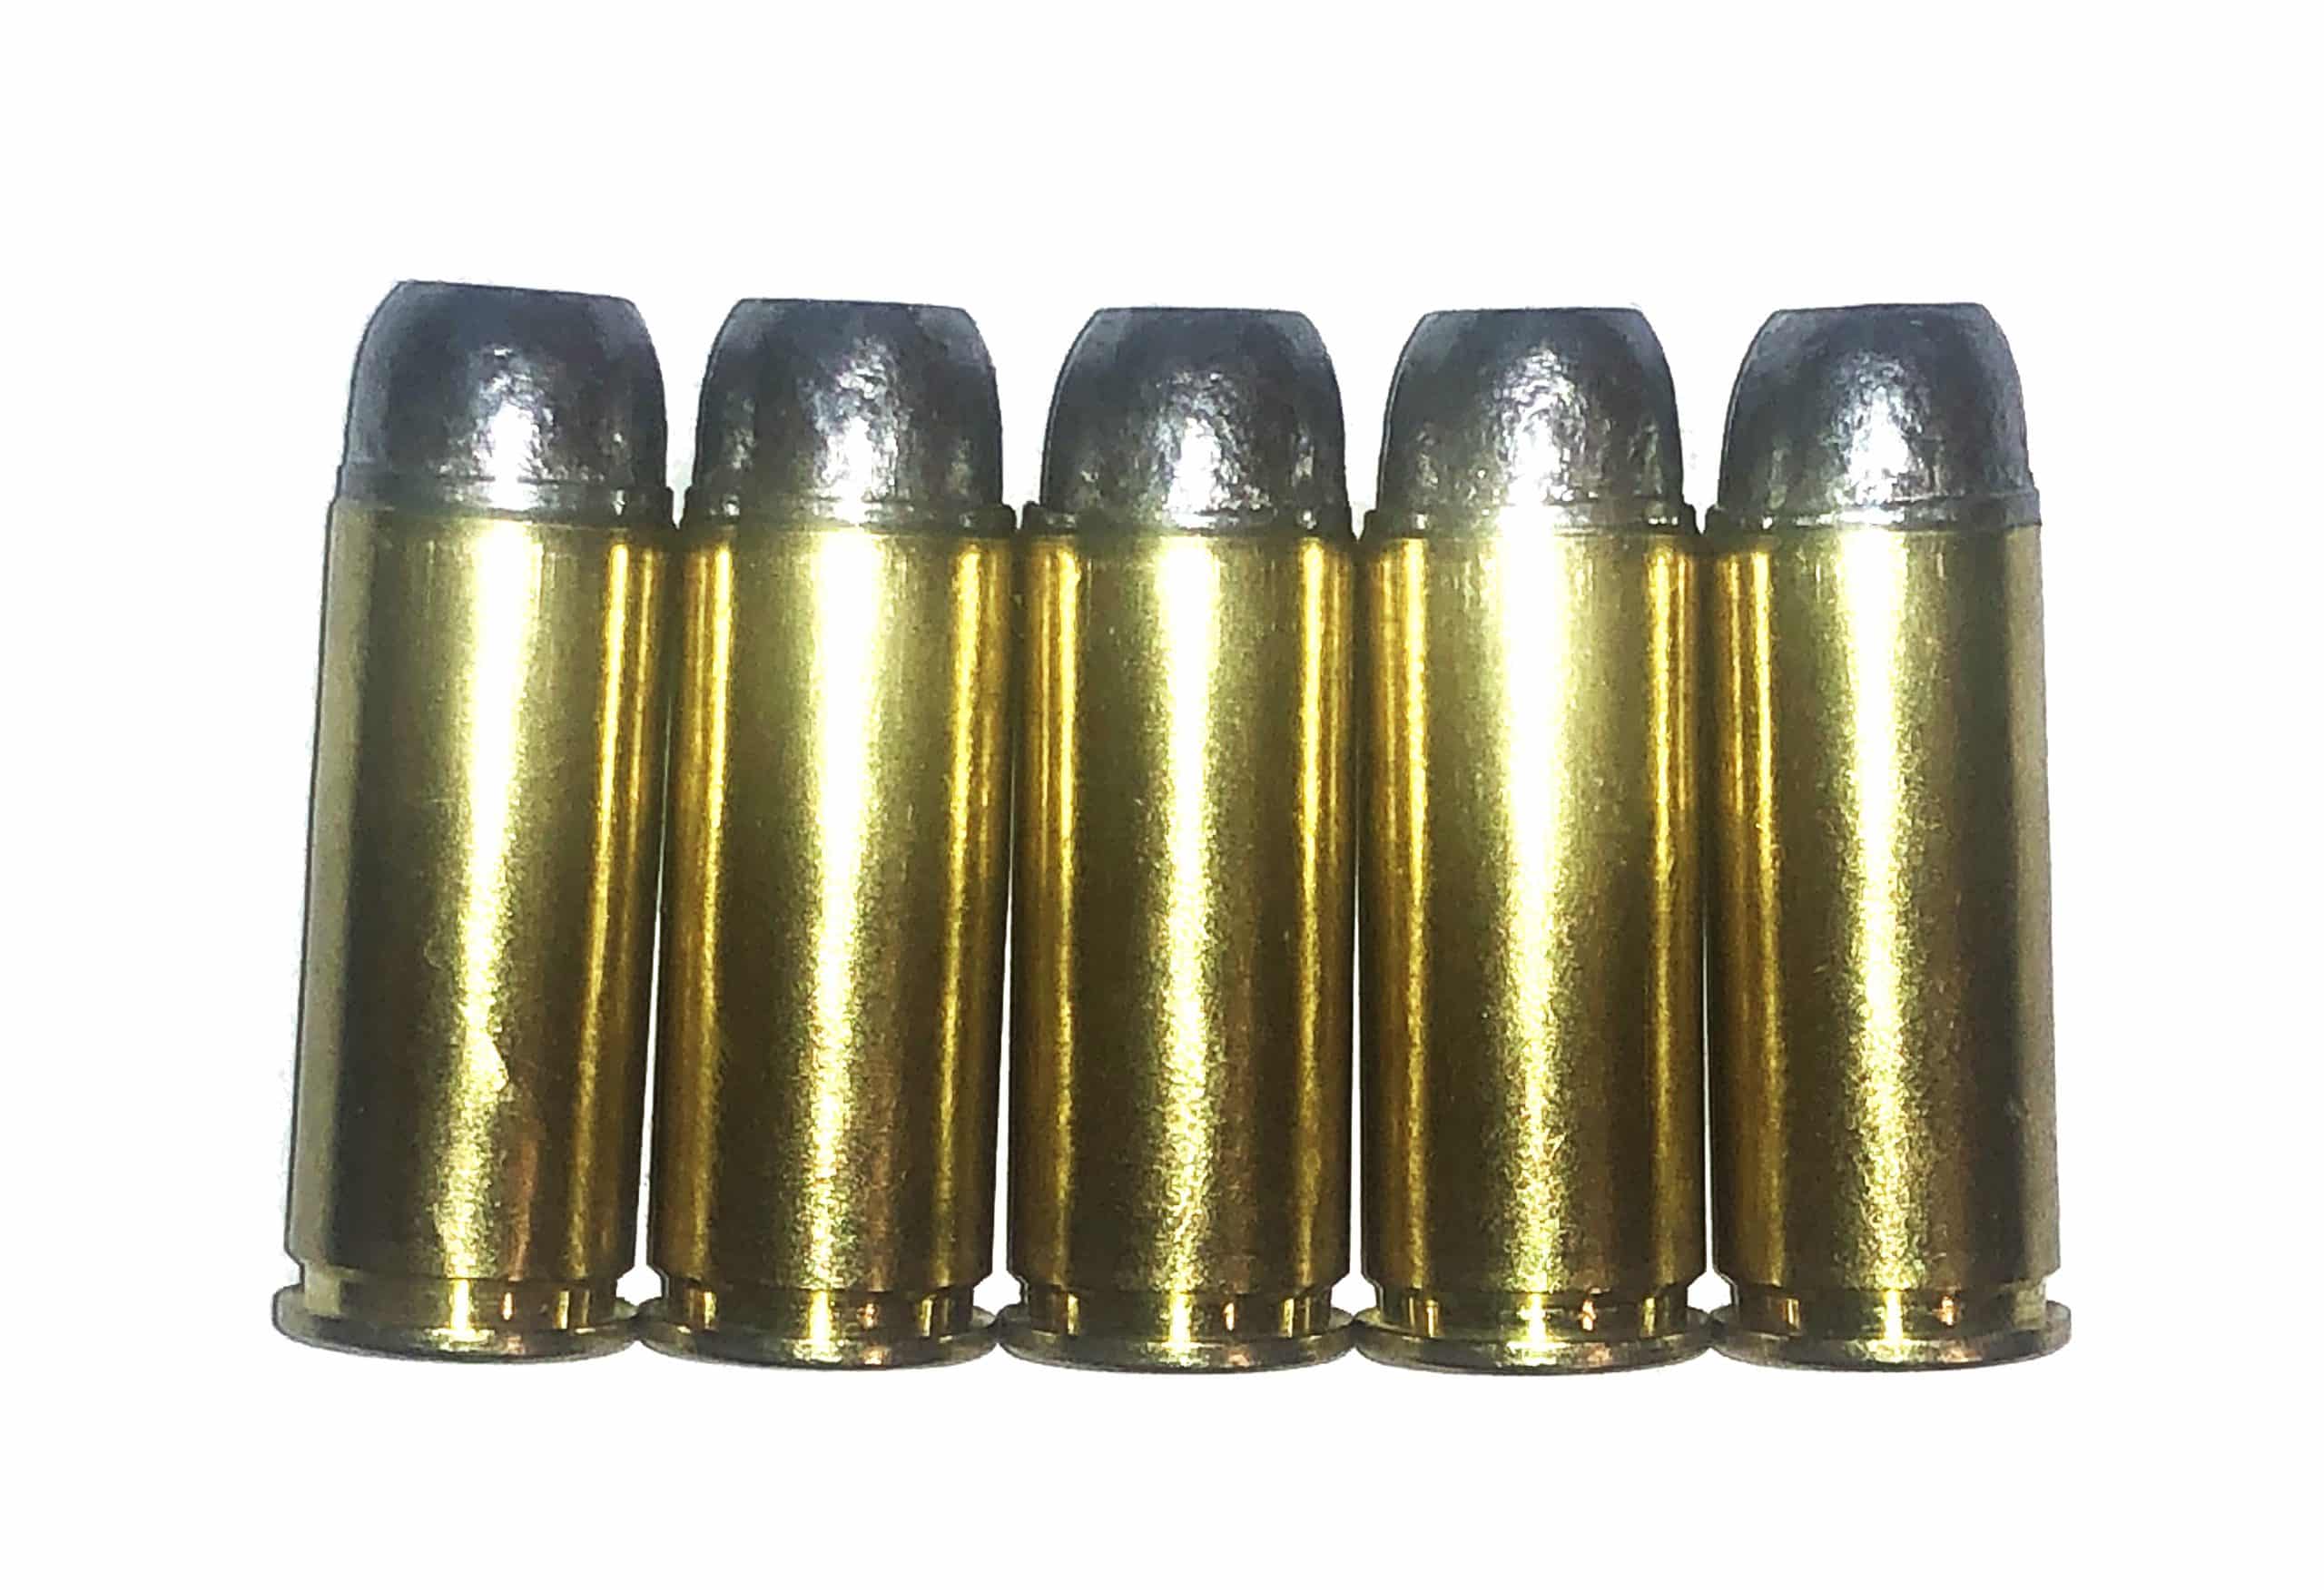 500 S&W Magnum Dummy Rounds Snap Caps Fake Bullets J&M Spec INERT